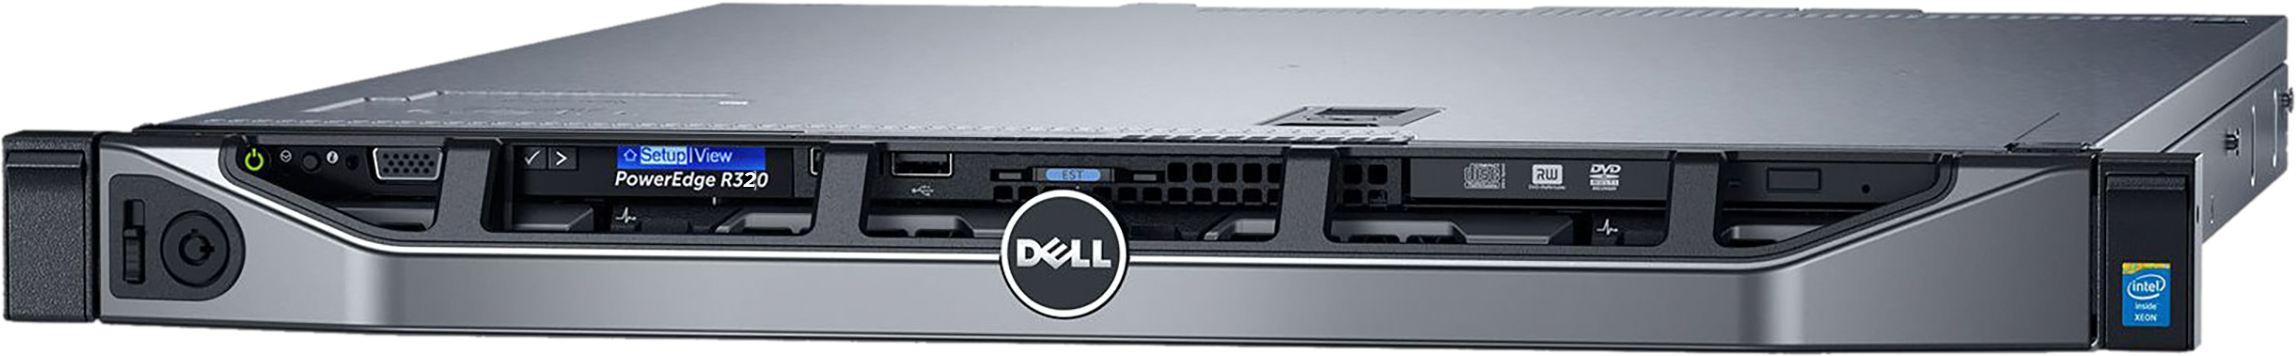 Аренда физического сервера DELL R320 / E5-2420 v2 / 8 GB RAM / 2 x 1 TB HDD / H310